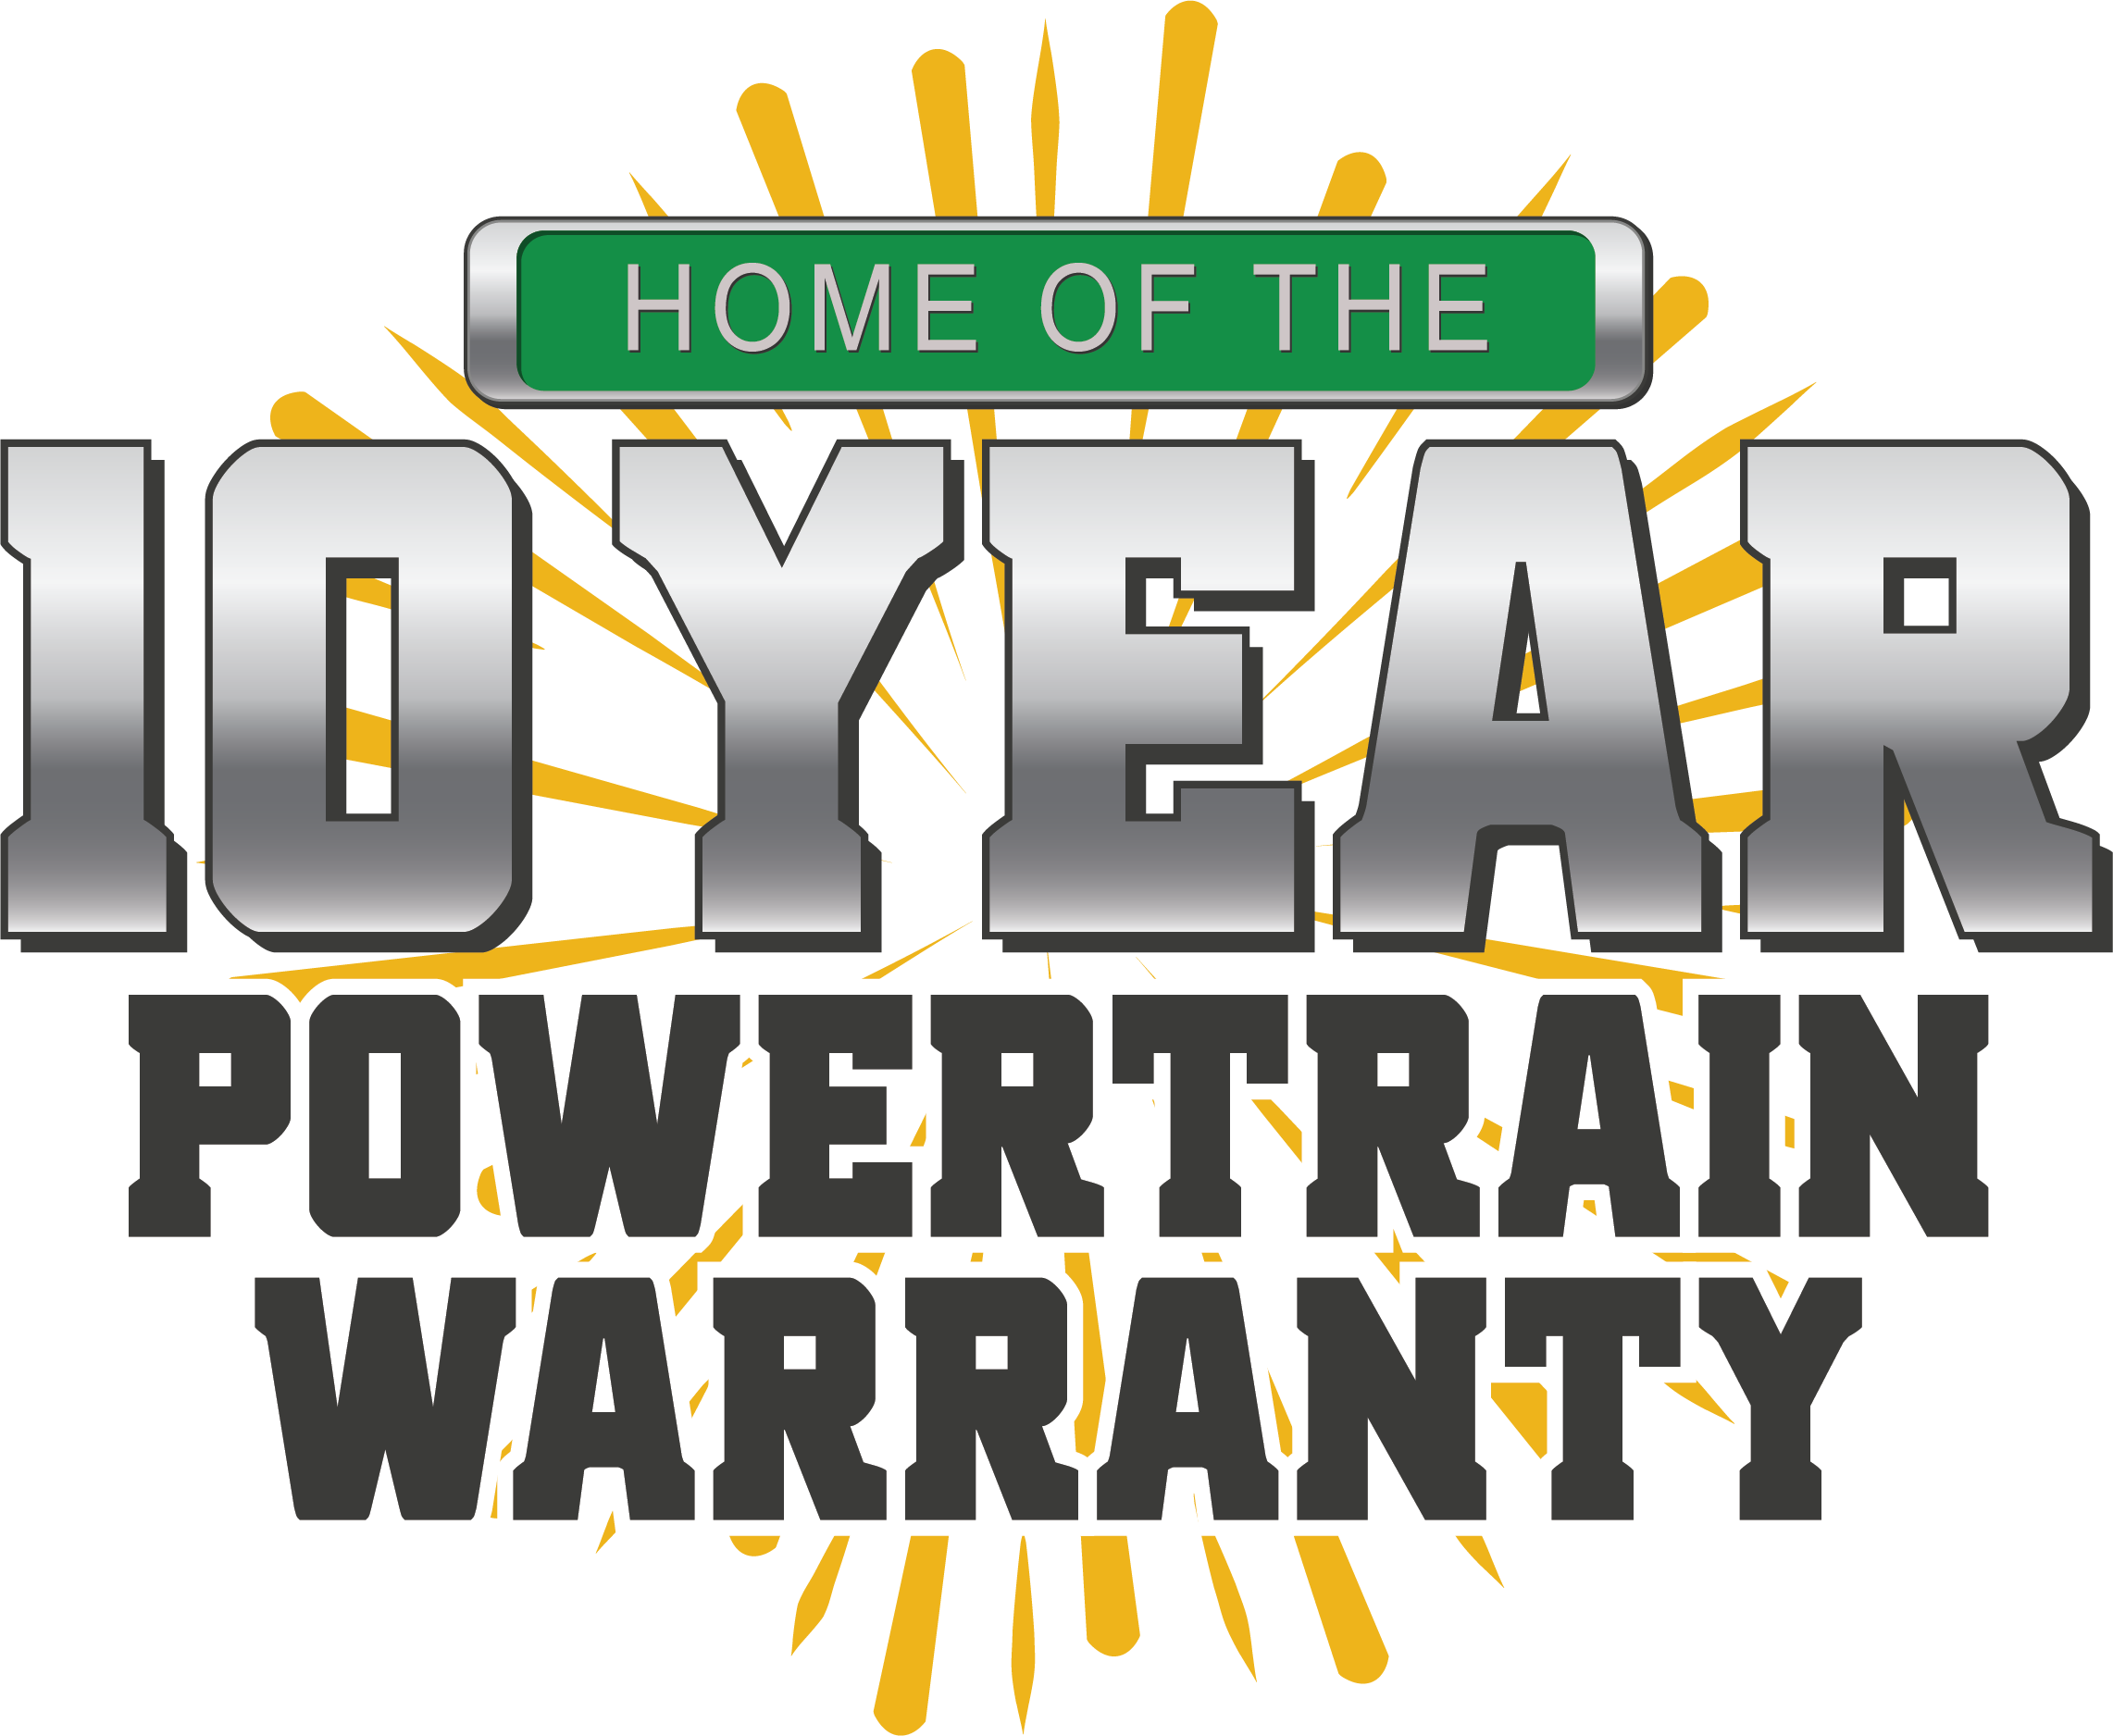 Bus Master Warranty - Home of the 10 Year Powertrain Warranty